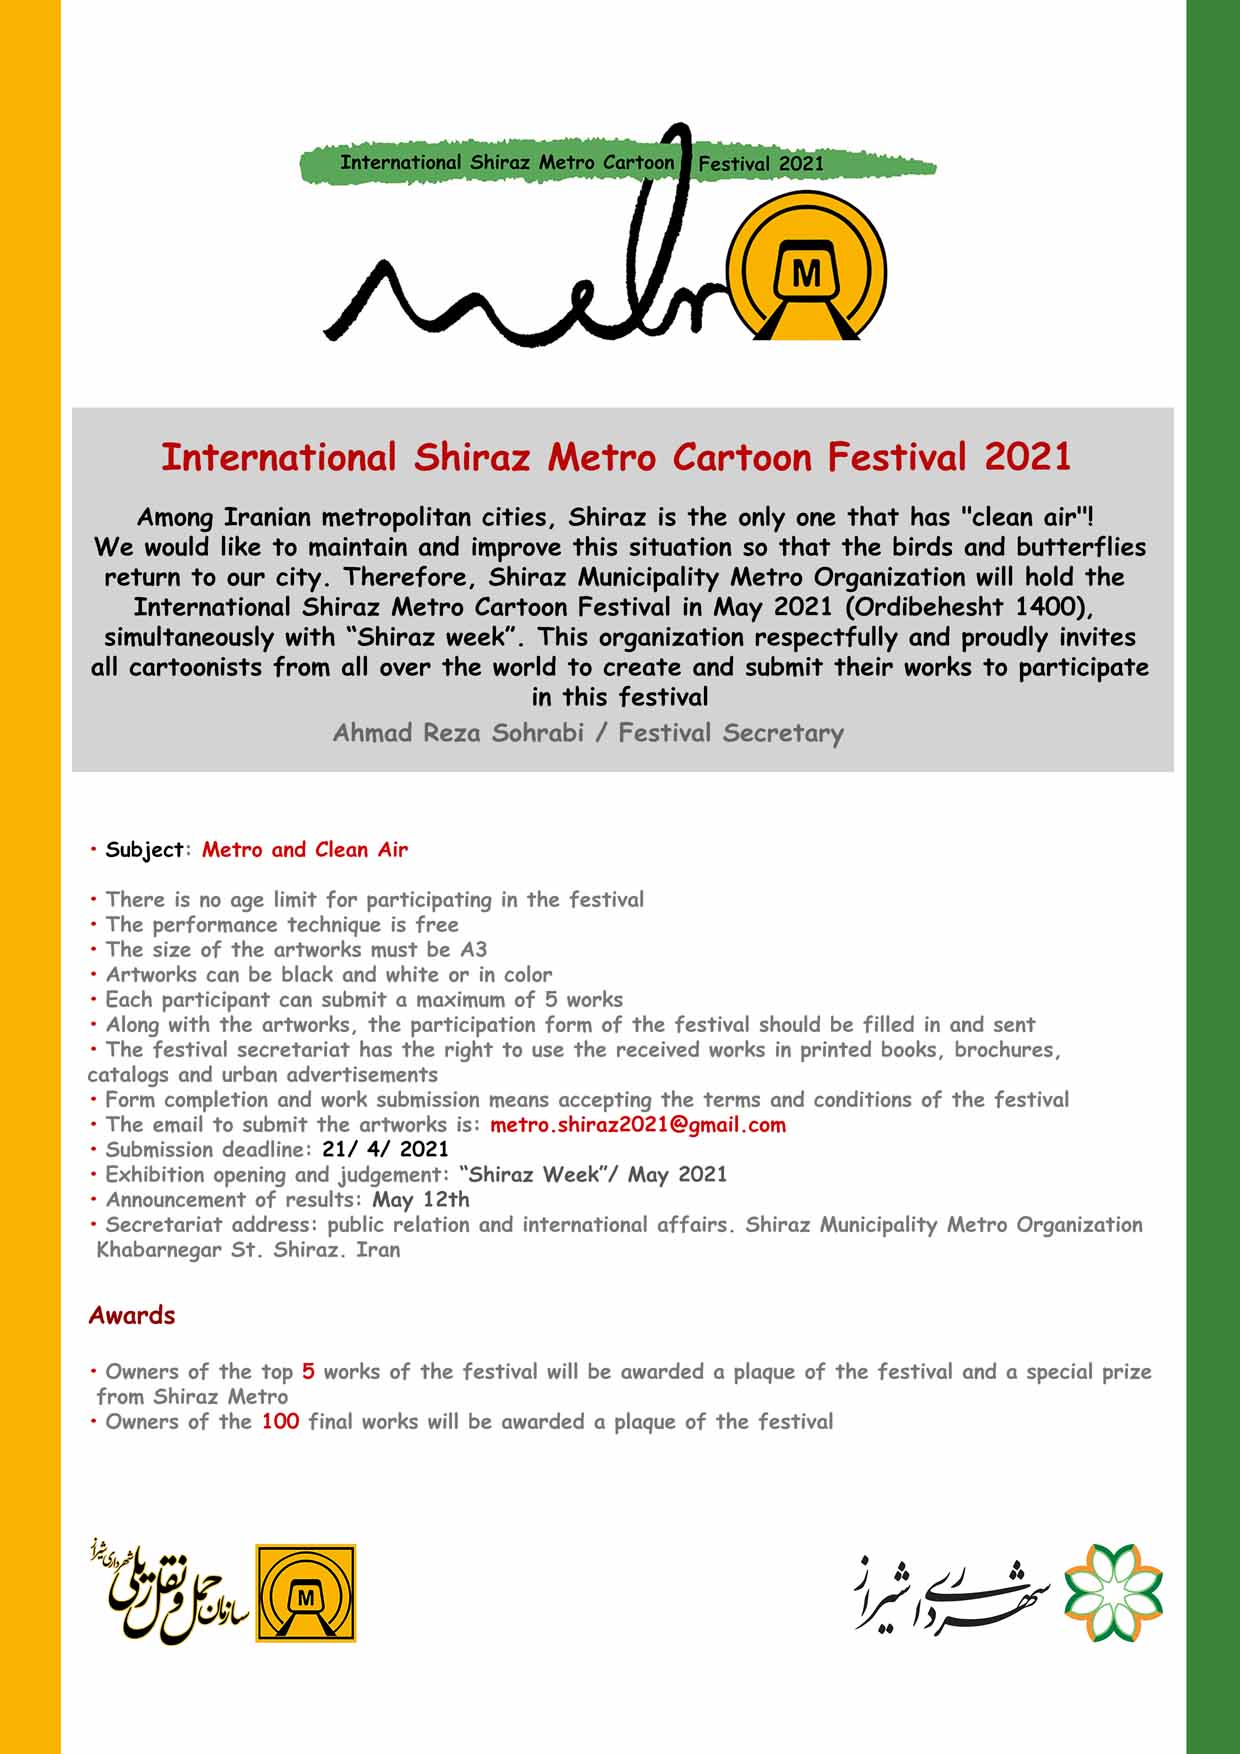 Internatiolnal Shiraz Merto Cartoon Festival 2021